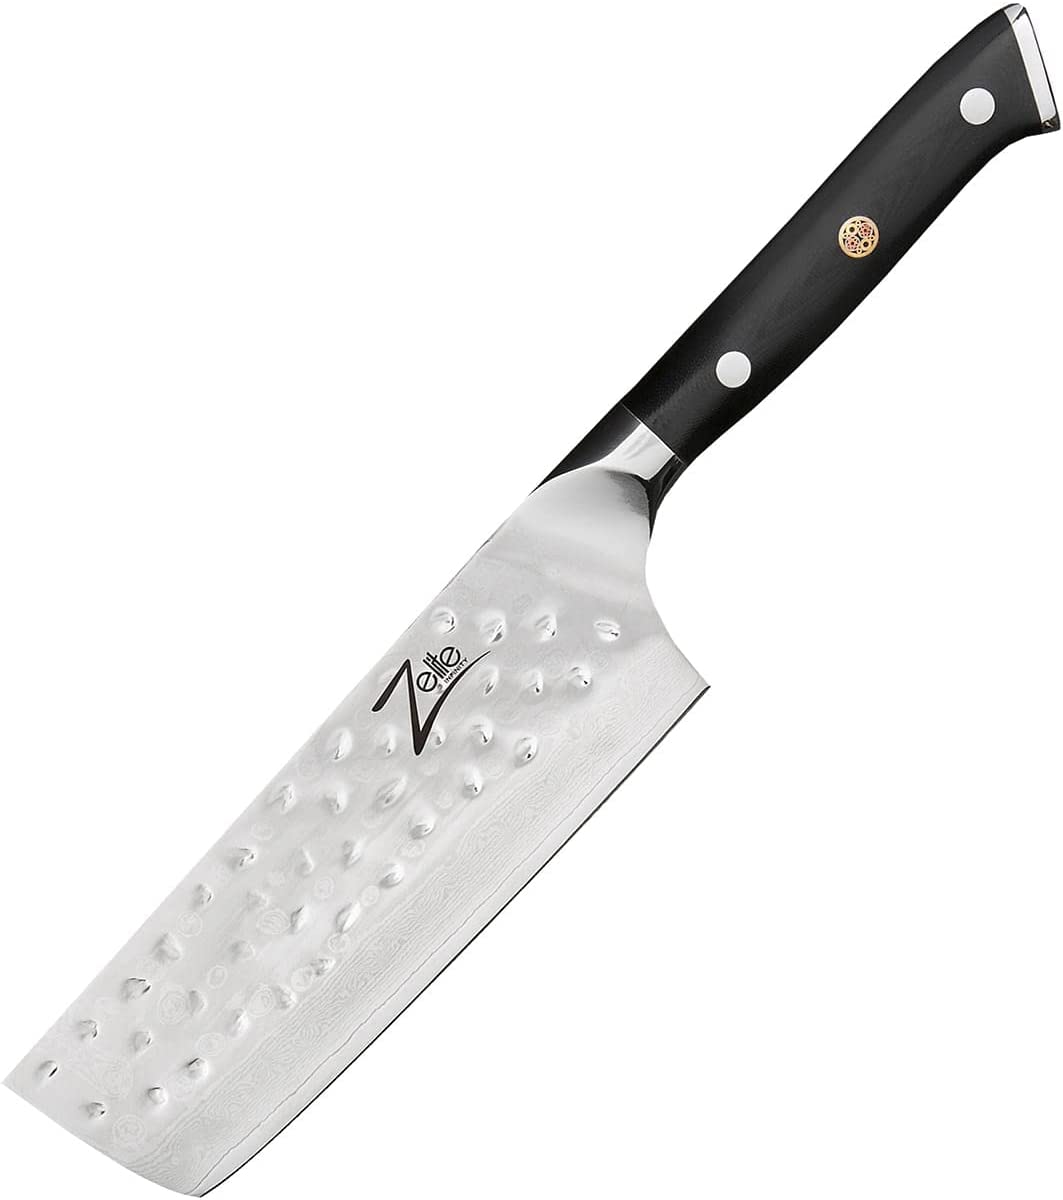  MAD SHARK Santoku Knife 8, Chef Knife Alternative for